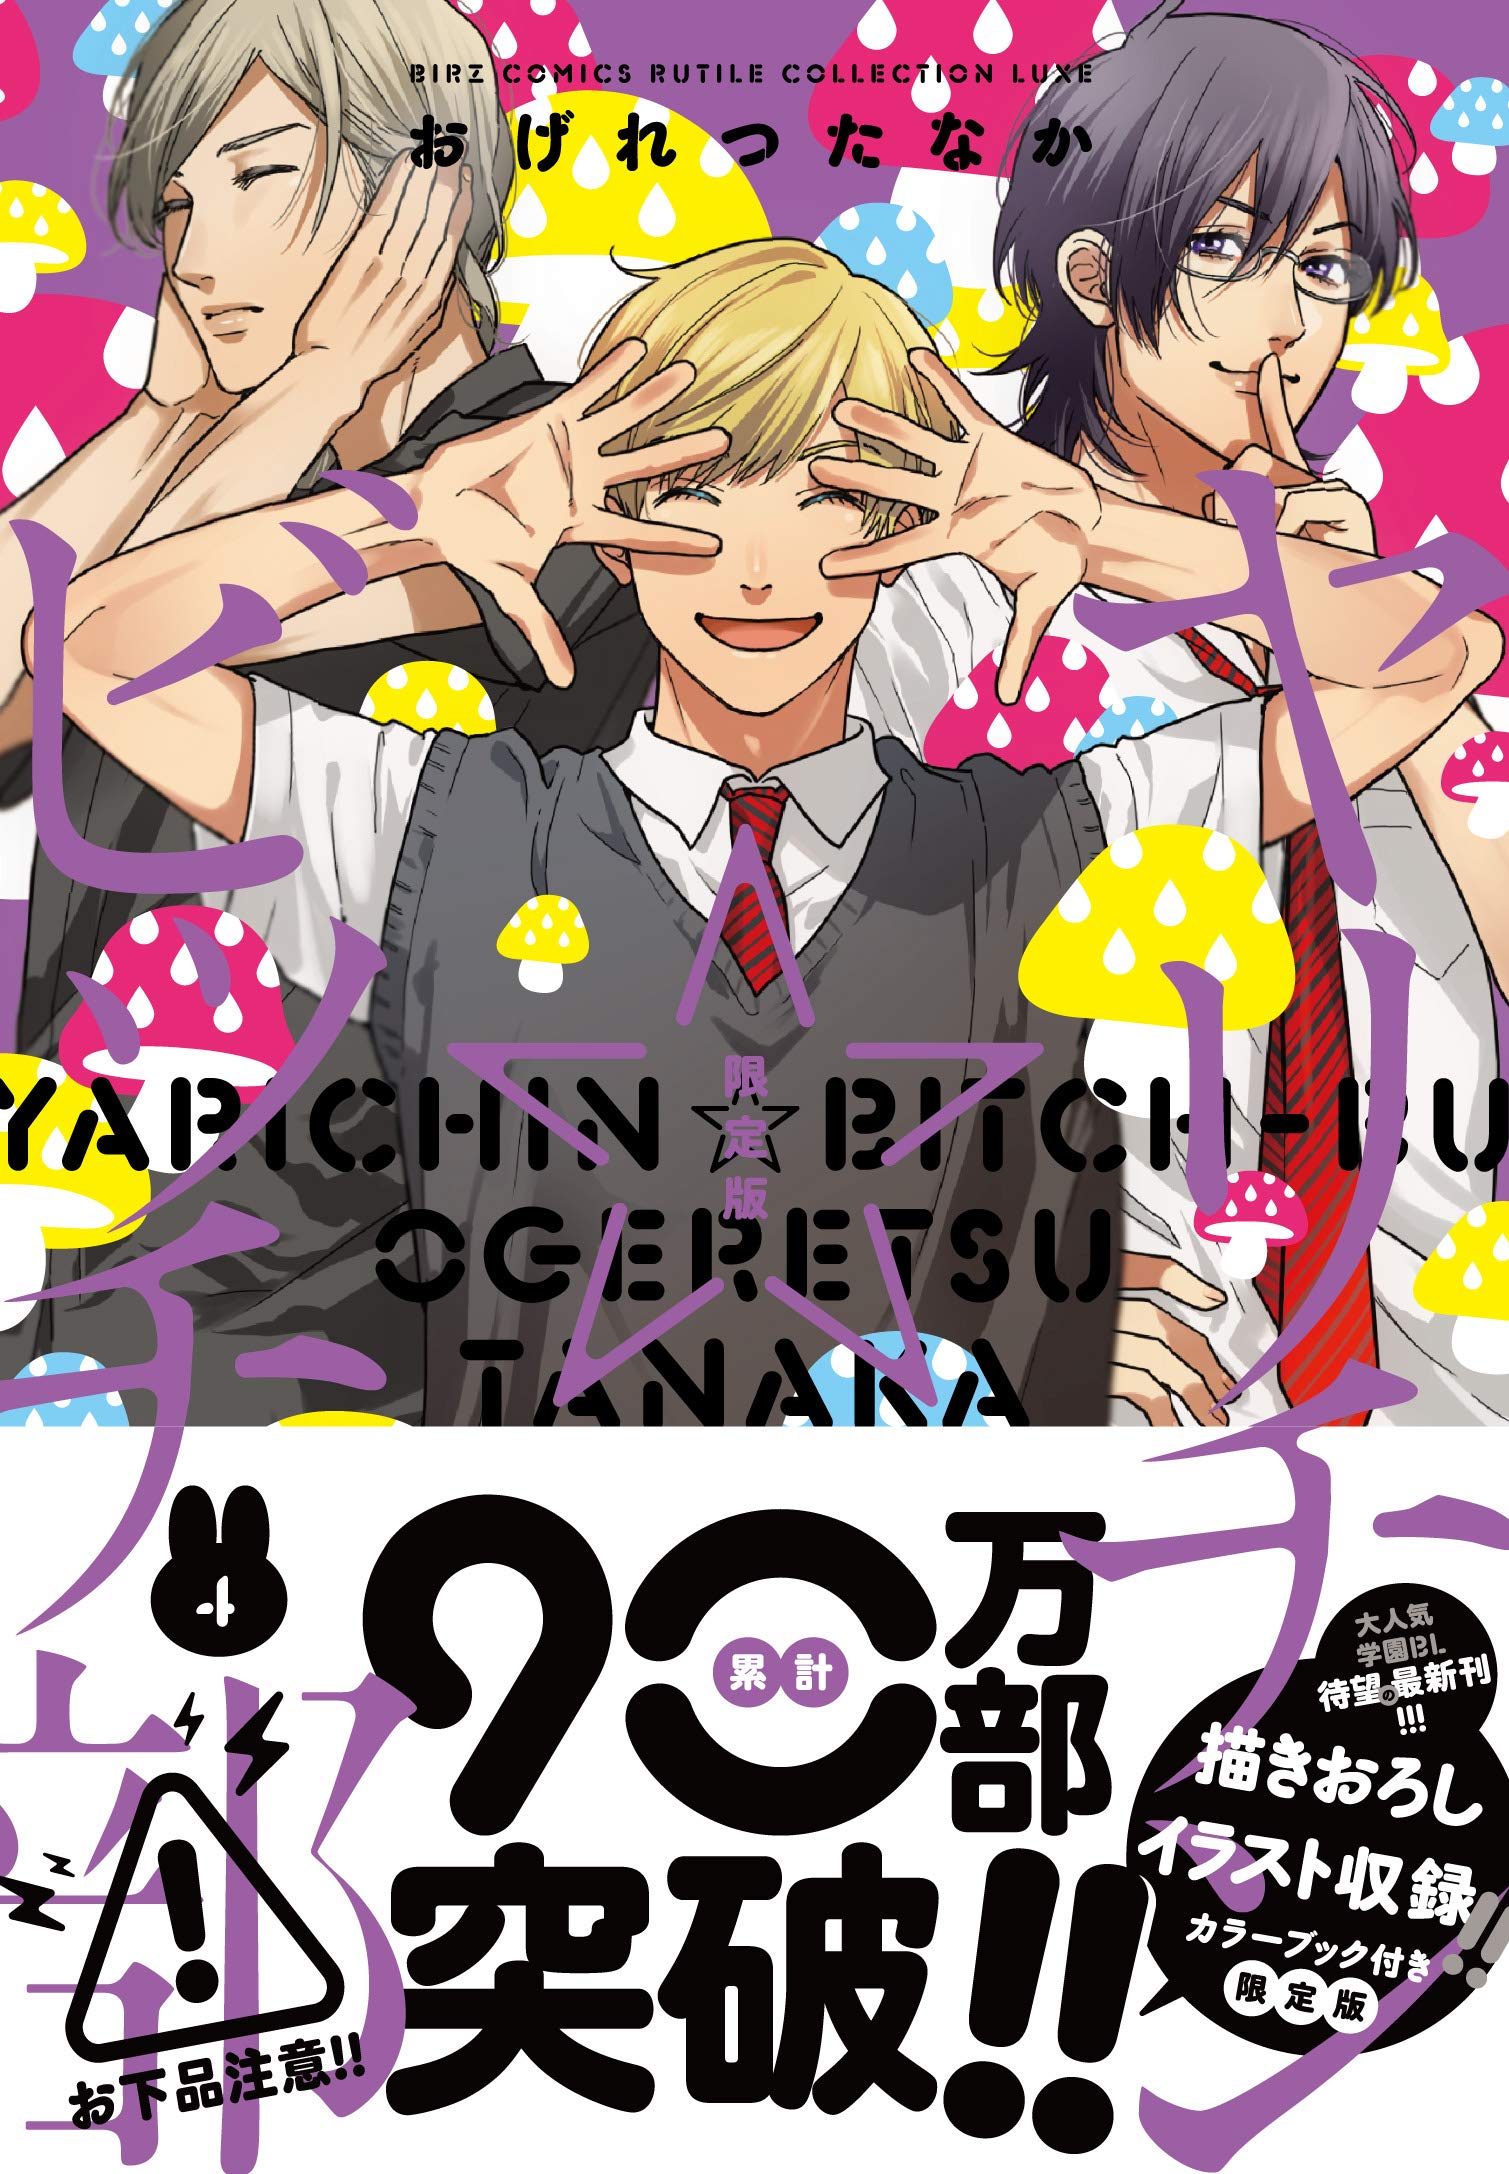 Boys Love (Yaoi) Comics - Yarichin☆Bitch-bu (ヤリチン☆ビッチ部 -4 限定版 (バーズコミックス ルチルコレクション リュクス)) / Ogeretsu Tanaka